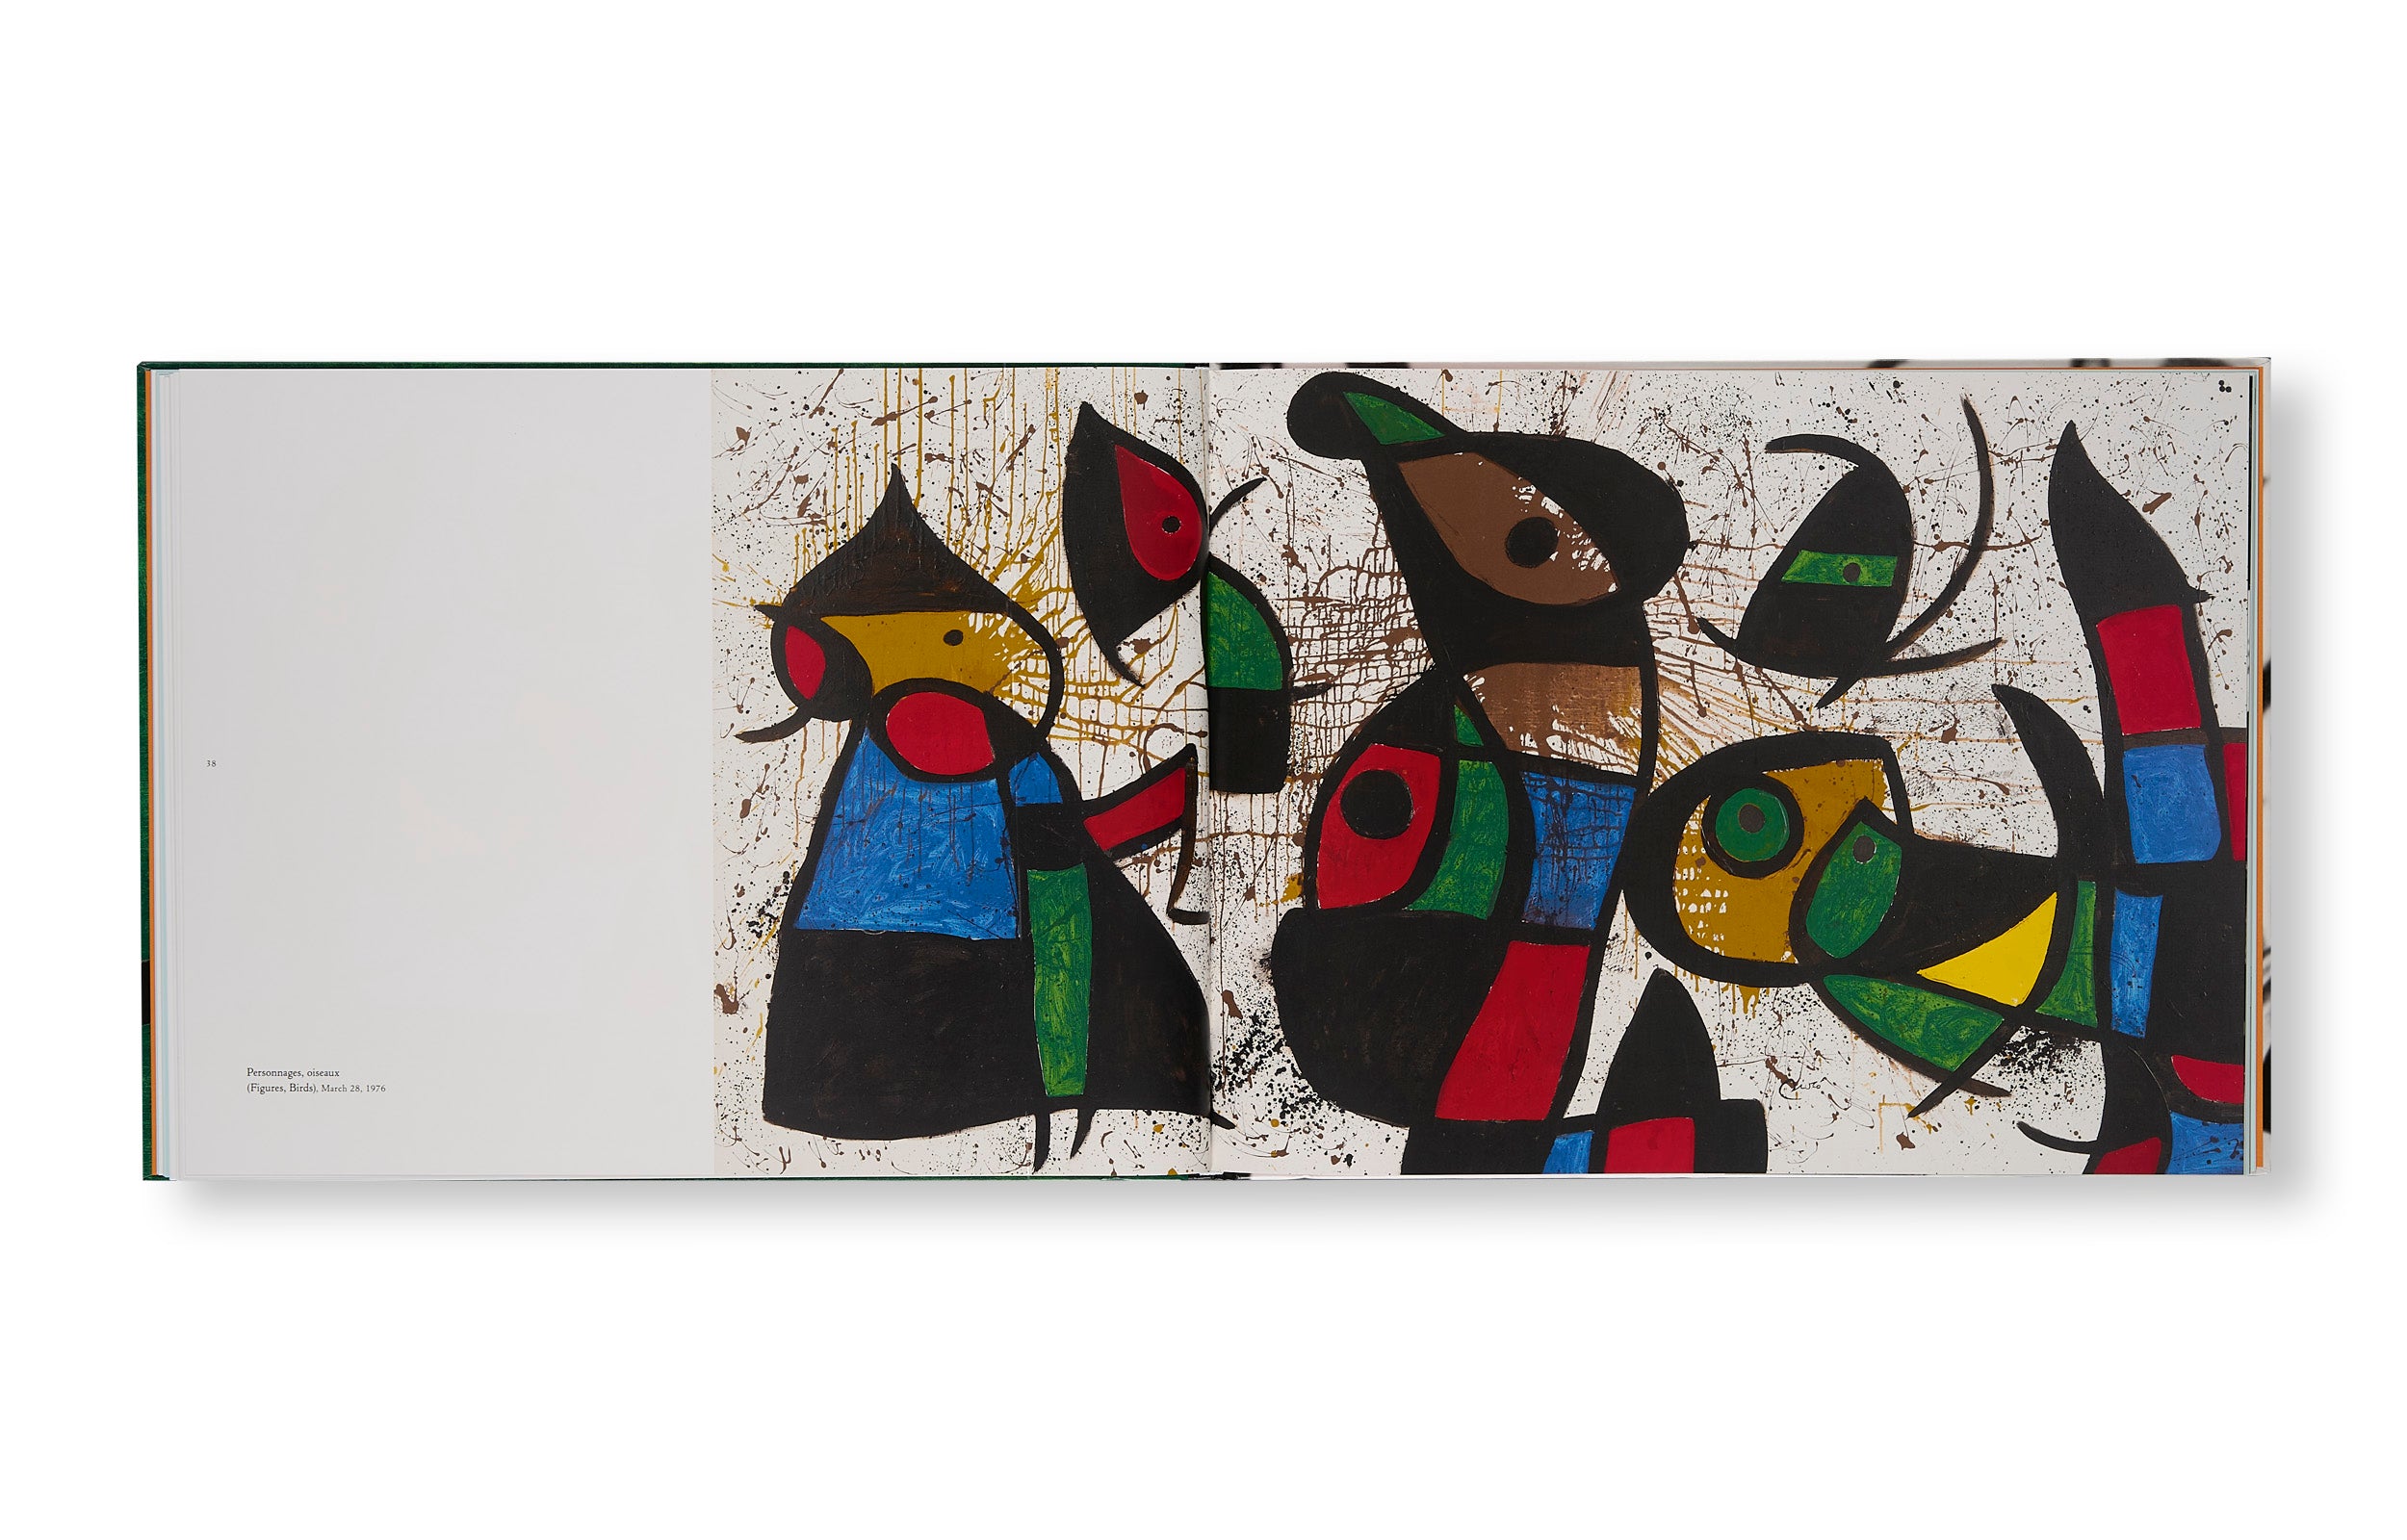 OISEAUX DANS L’ESPACE by Joan Miró